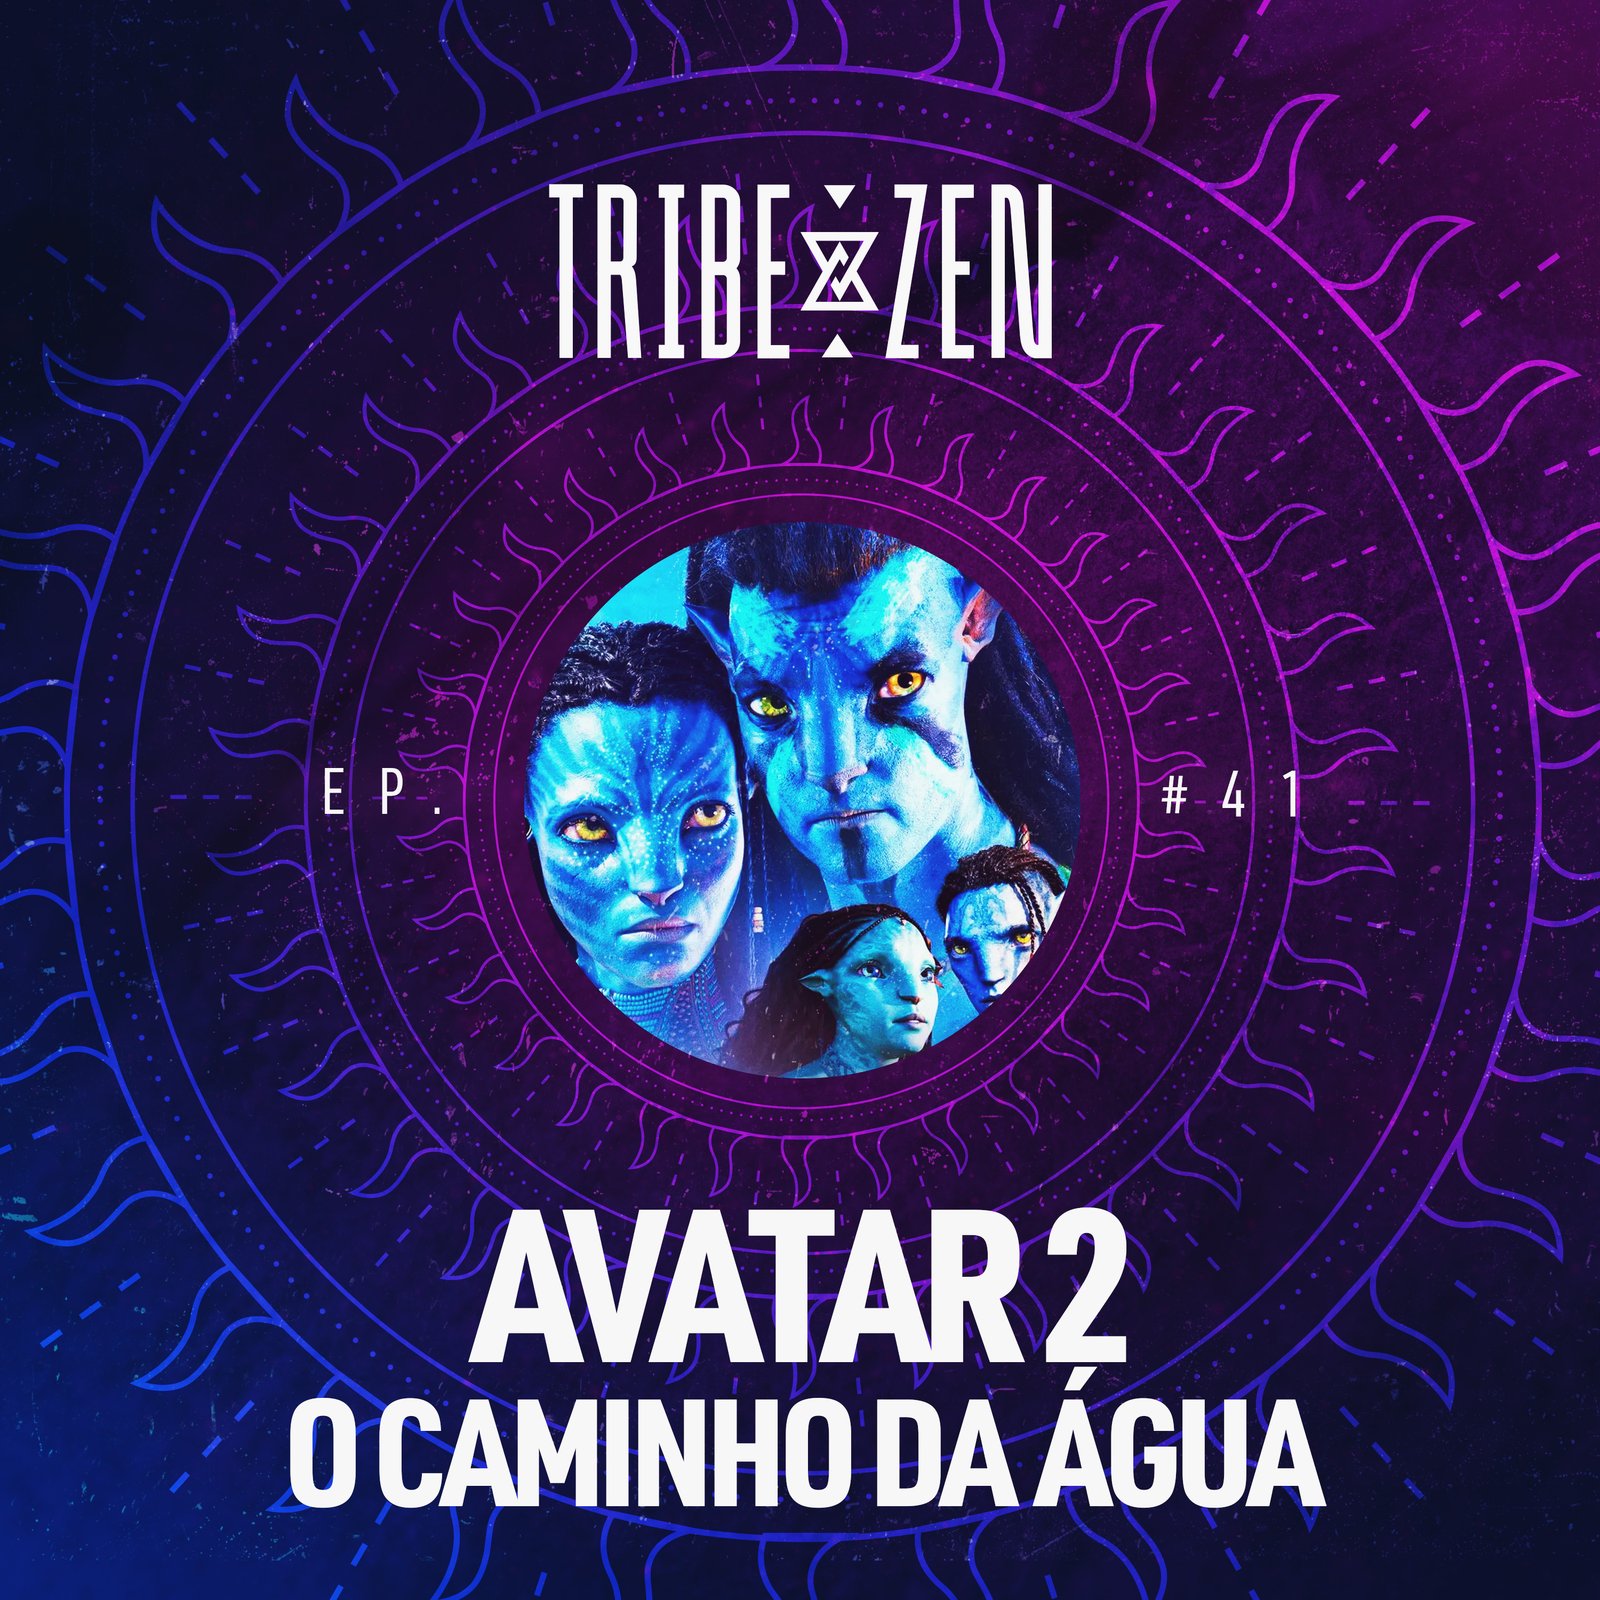 tribe zen podcast Avatar 2